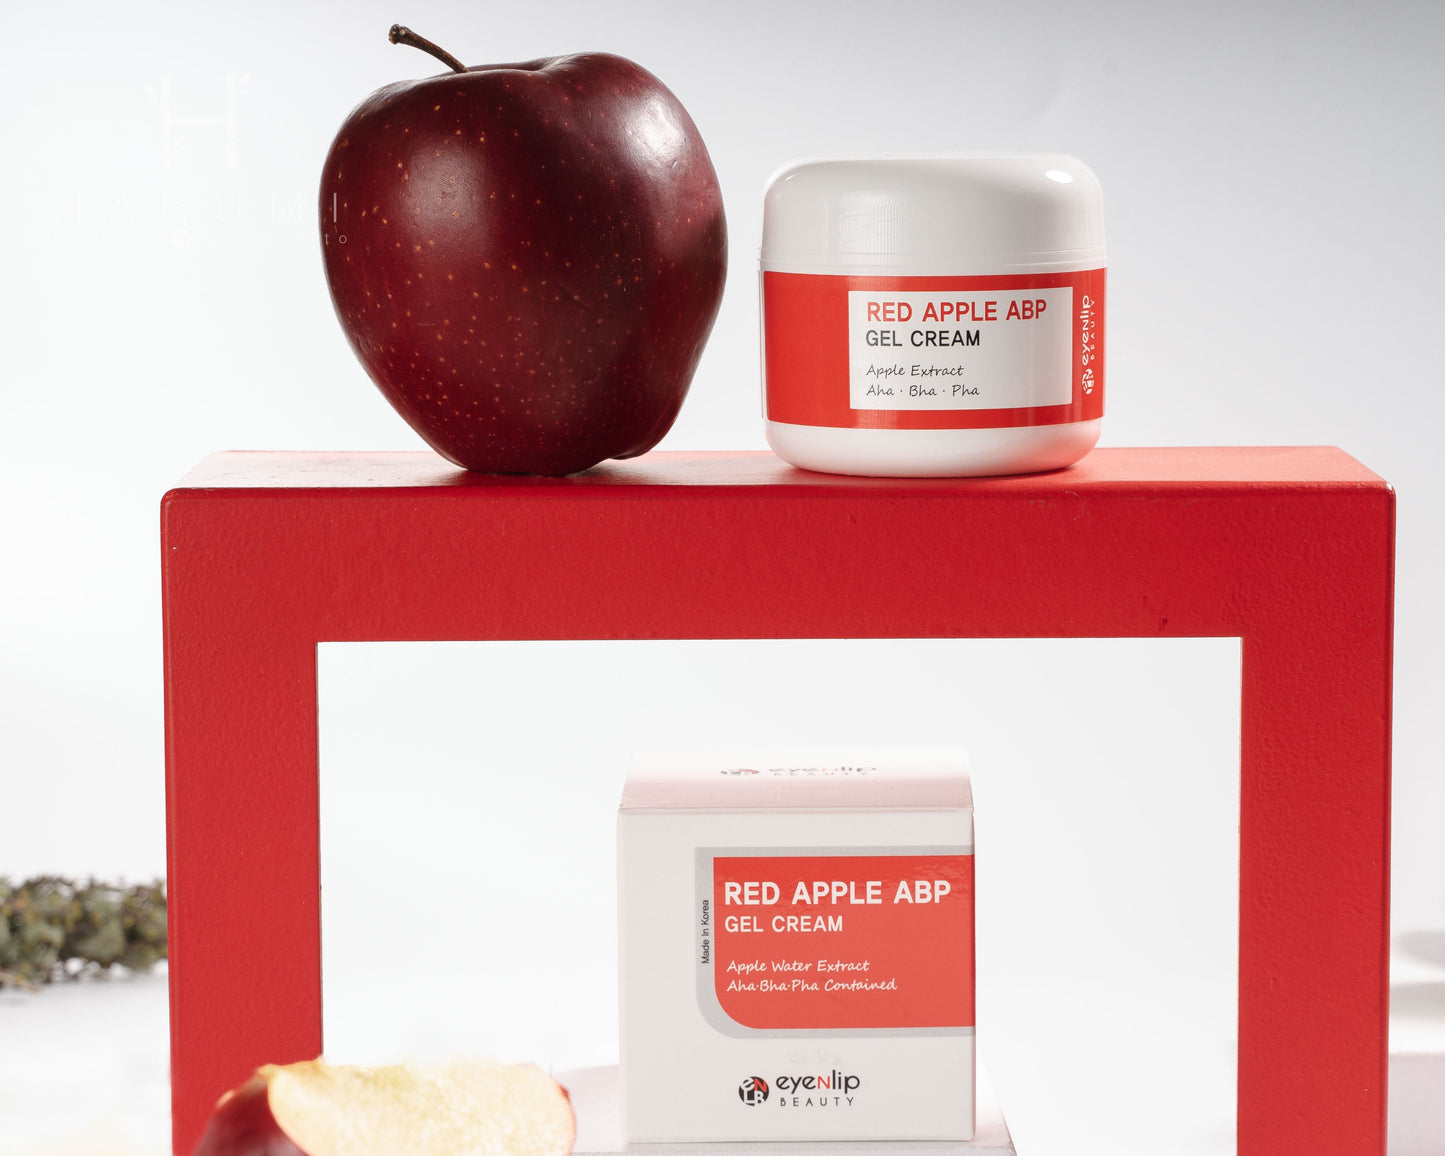 Eyenlip Red Apple Abp Gel Cream Skincare maquillaje productos de belleza coreanos en Colombia kbeauty